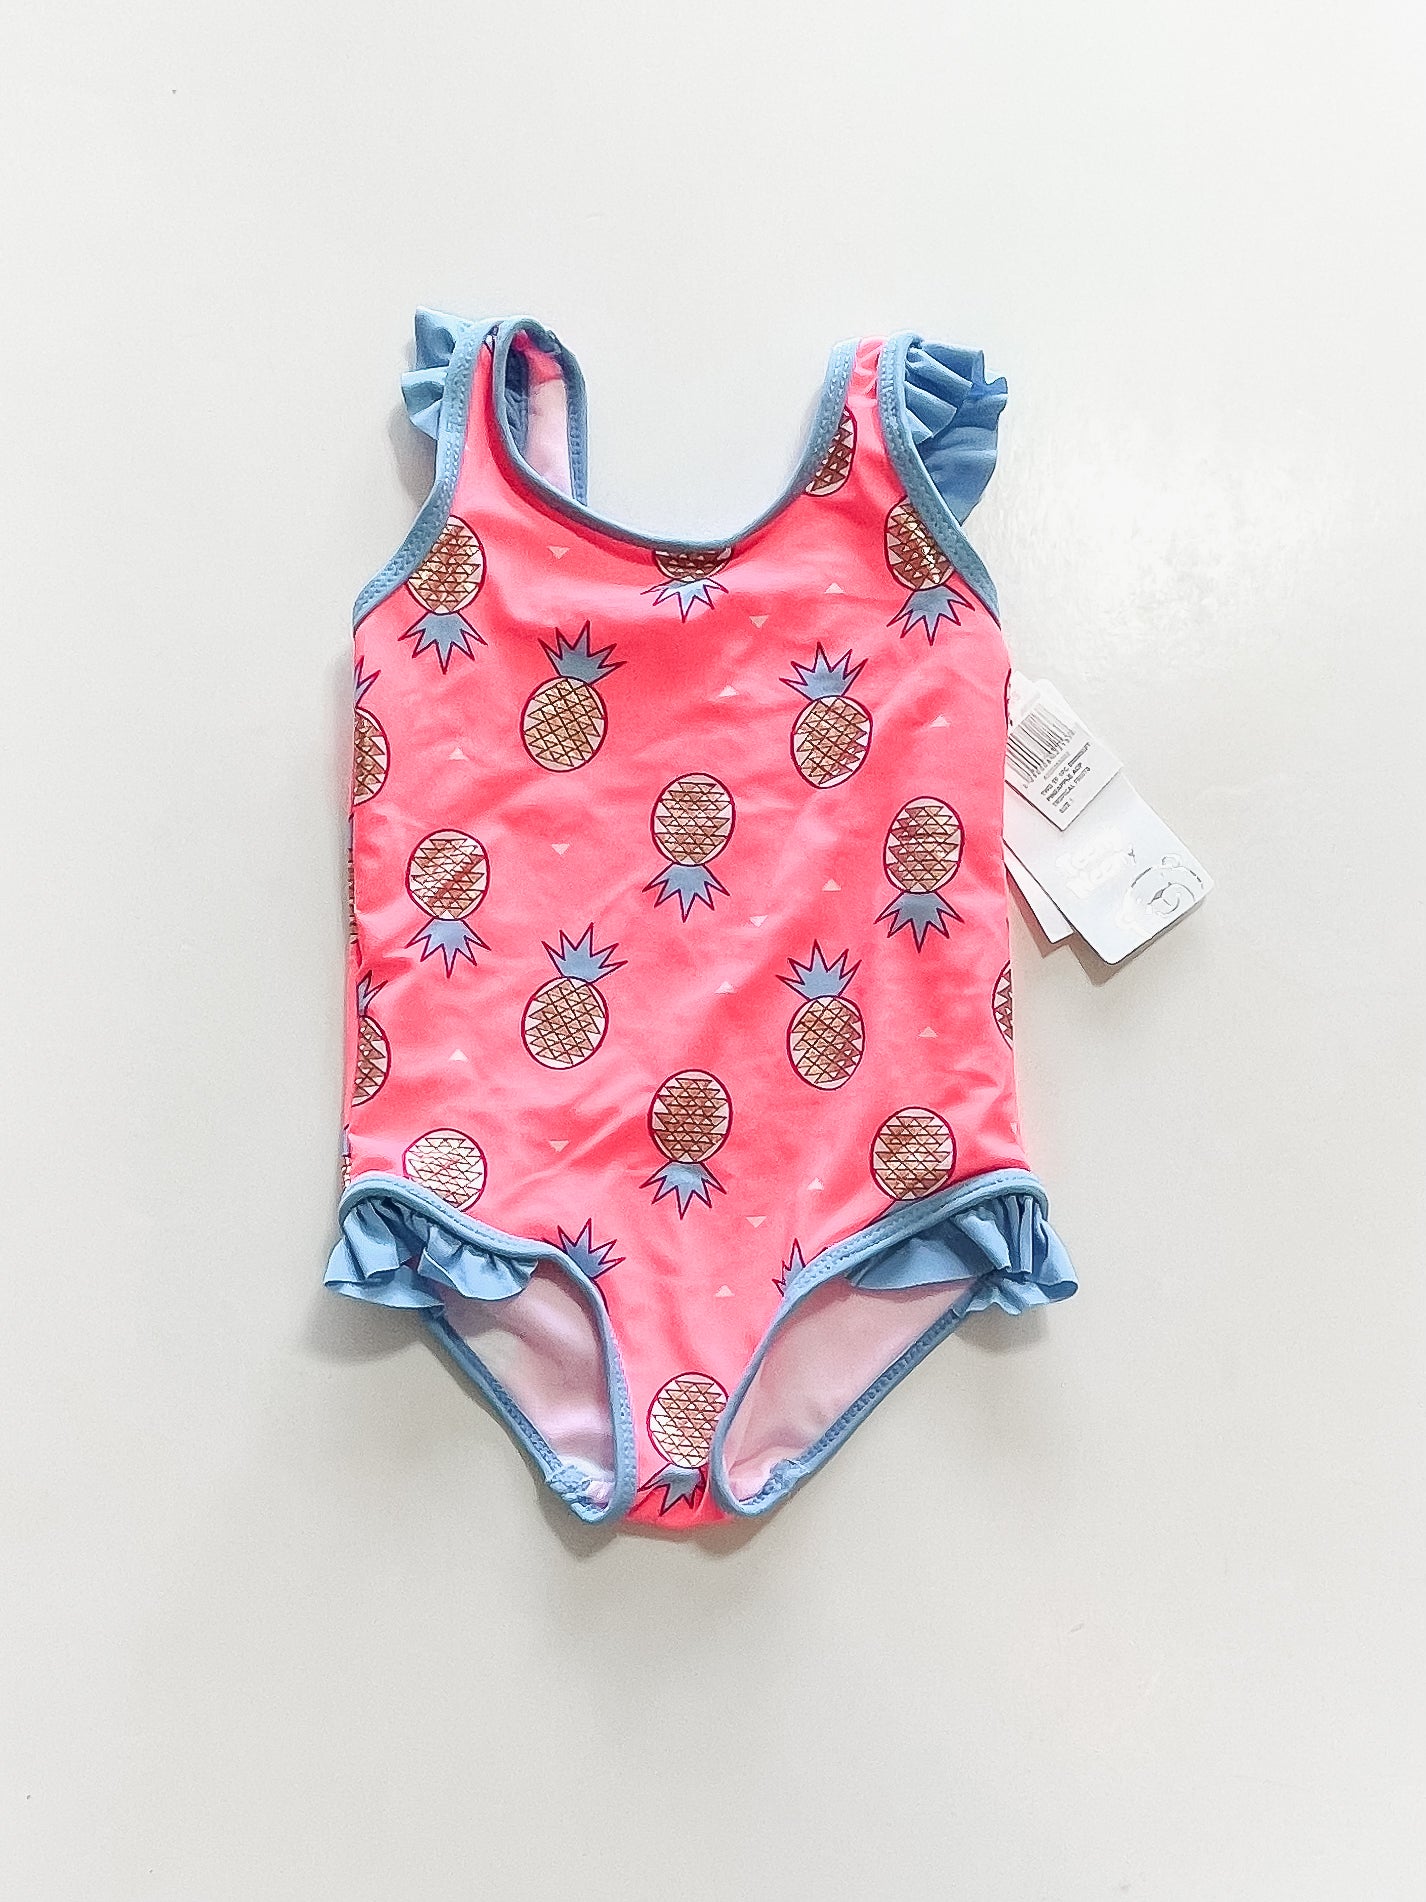 BNWT Teeny Weeny pineapple swim suit (1y)